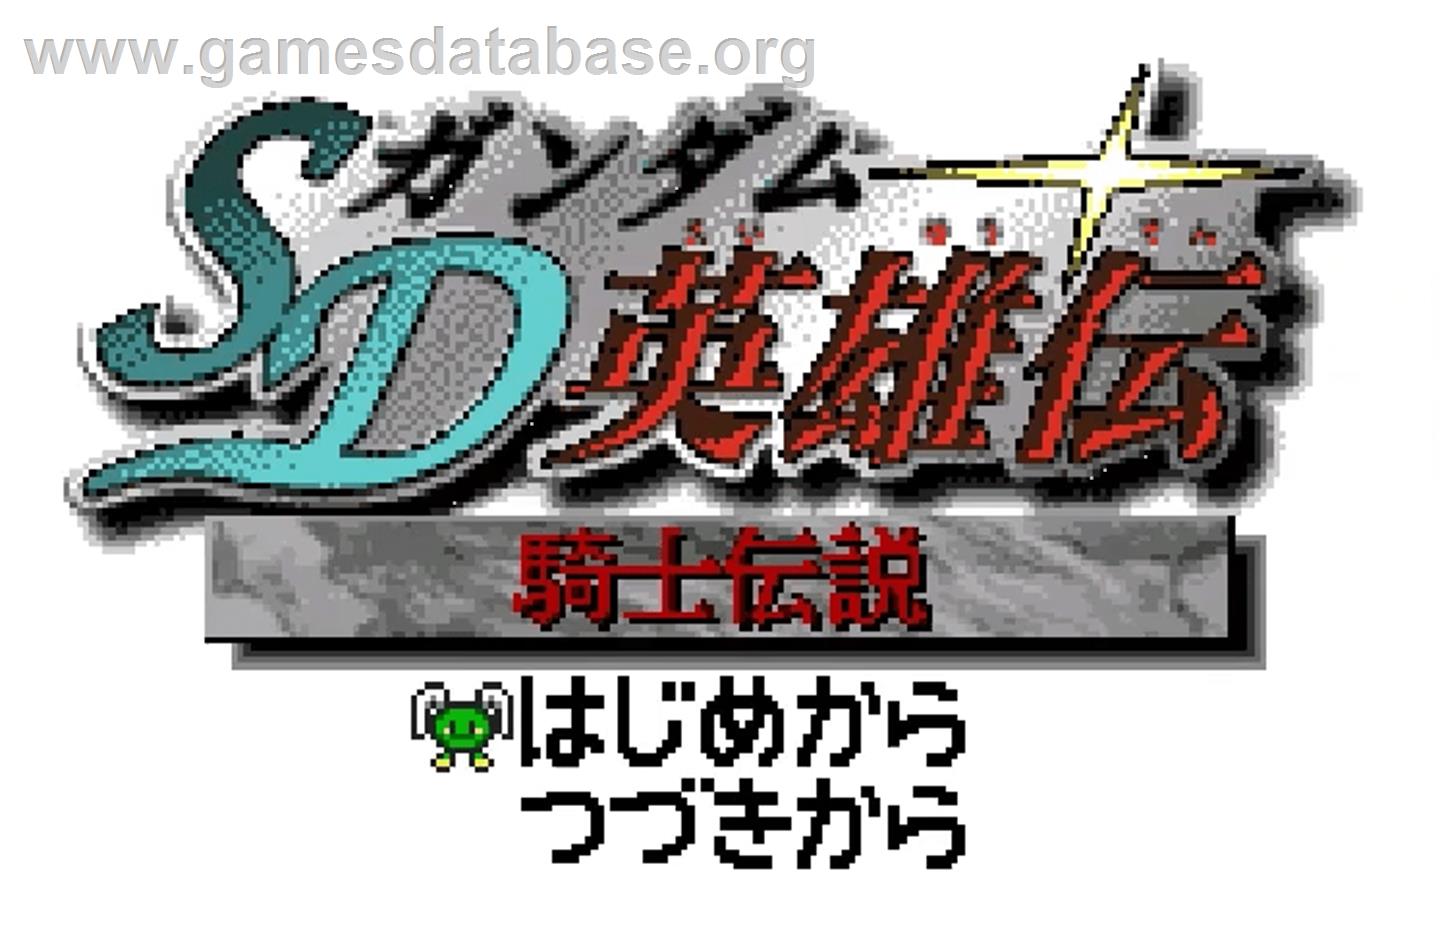 SD Gundam: Knight Legend - Bandai WonderSwan Color - Artwork - Title Screen